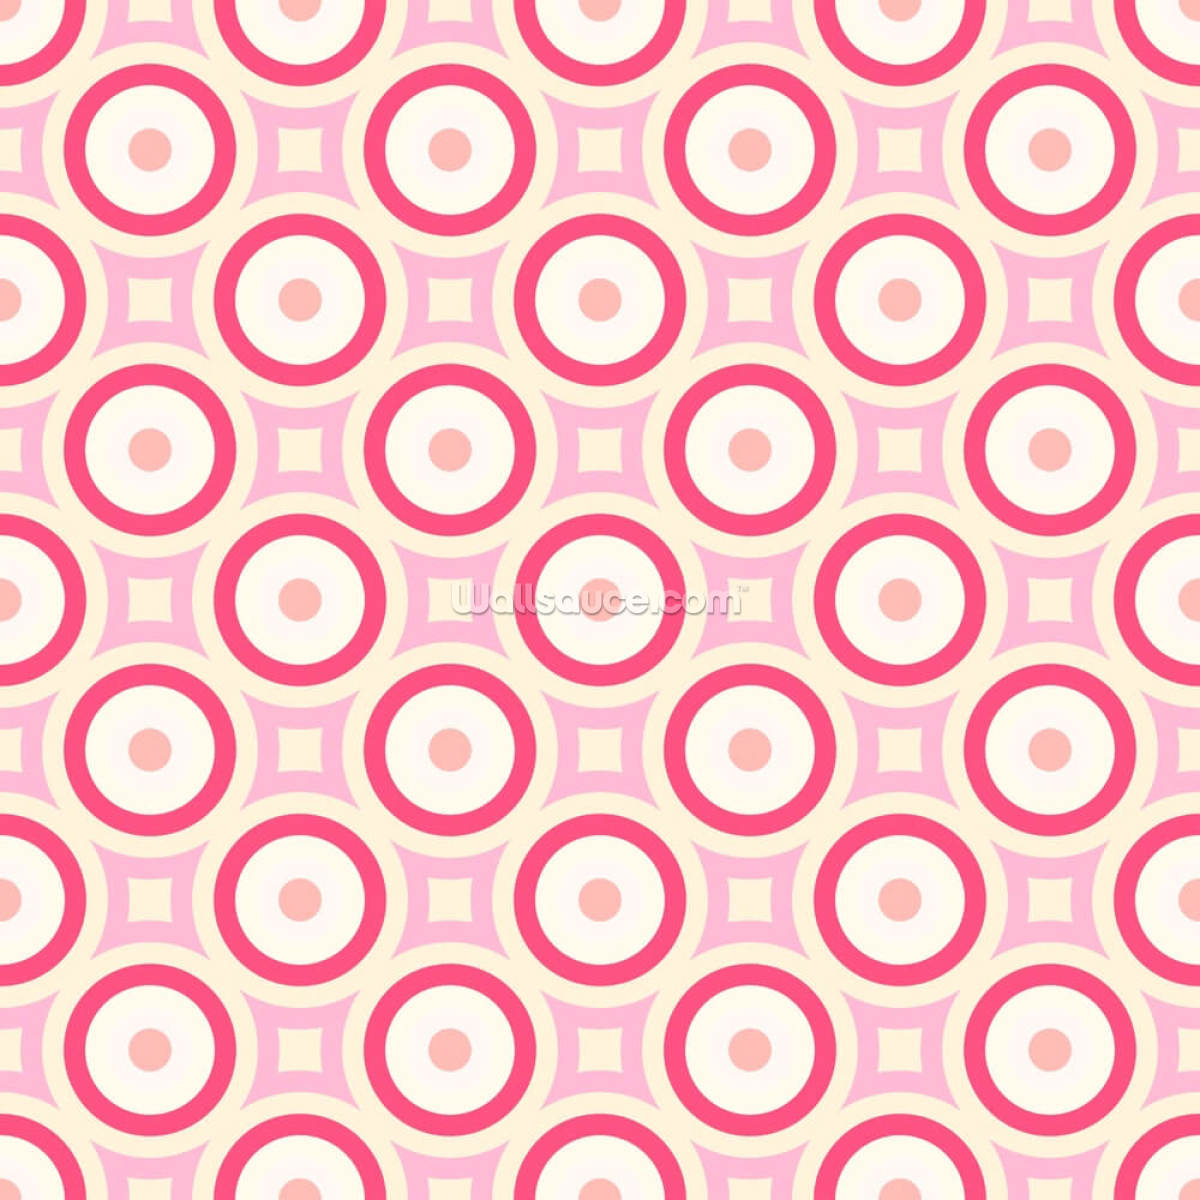 cirkler-rd-og-pink